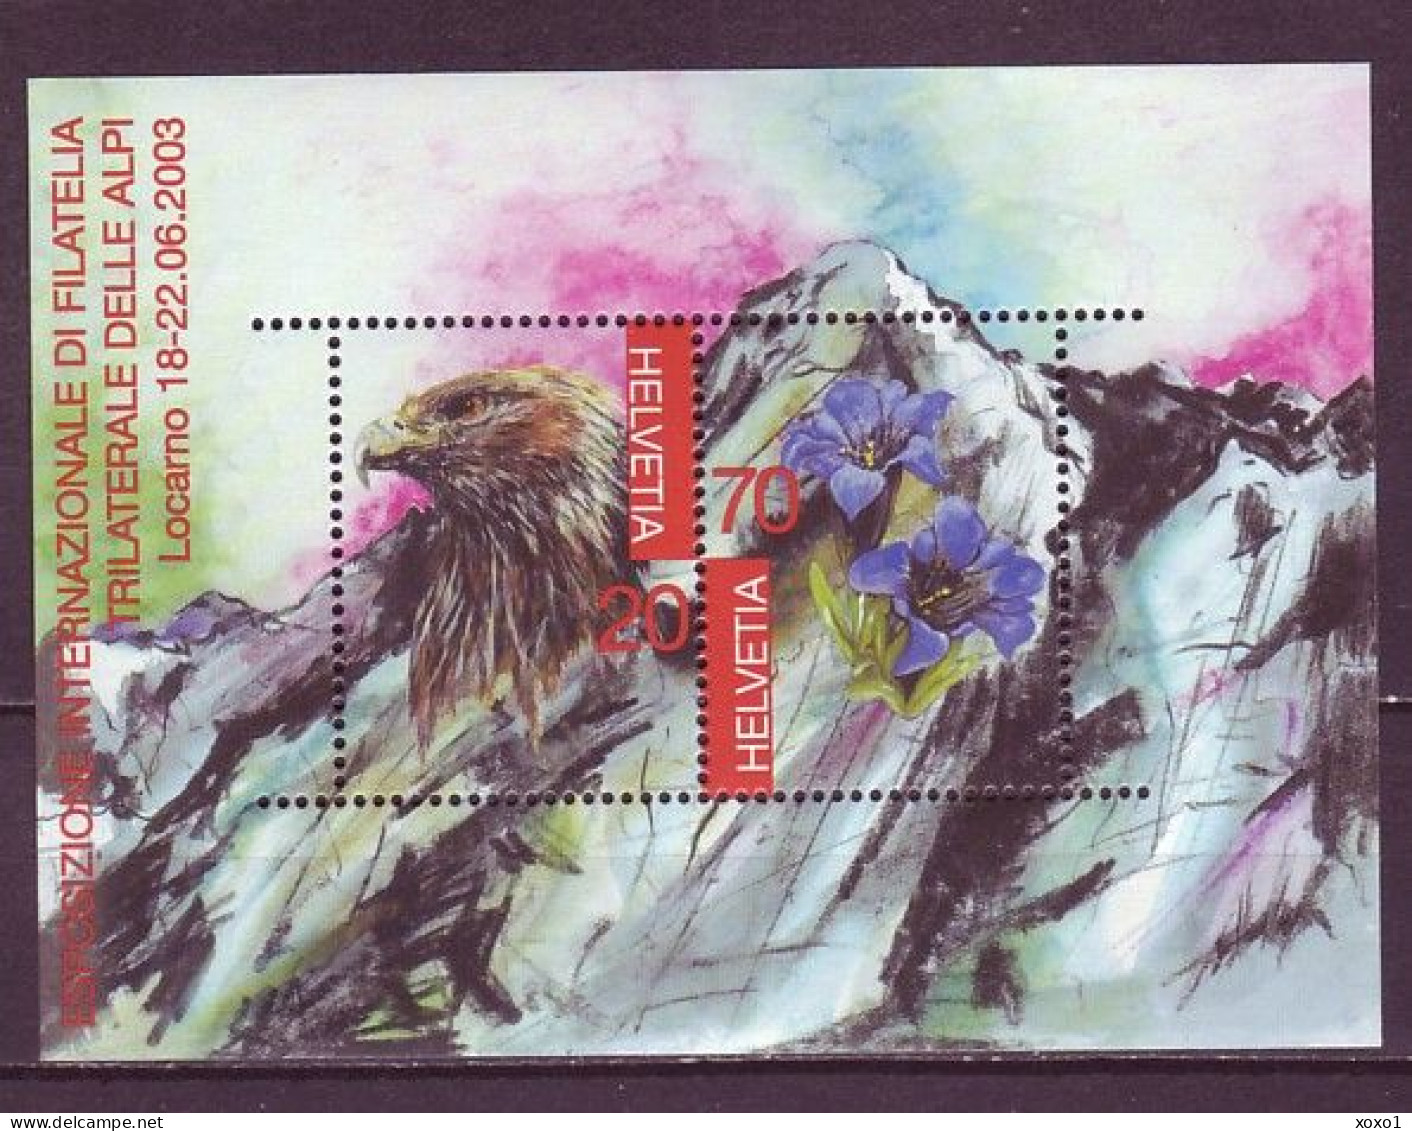 Switzerland 2003 MiNr. 1836 - 1837 (Block 33) Mont Dolent France–Switzerland–Italy Border Triangle S\sh MNH** 2.00 € - Montagne